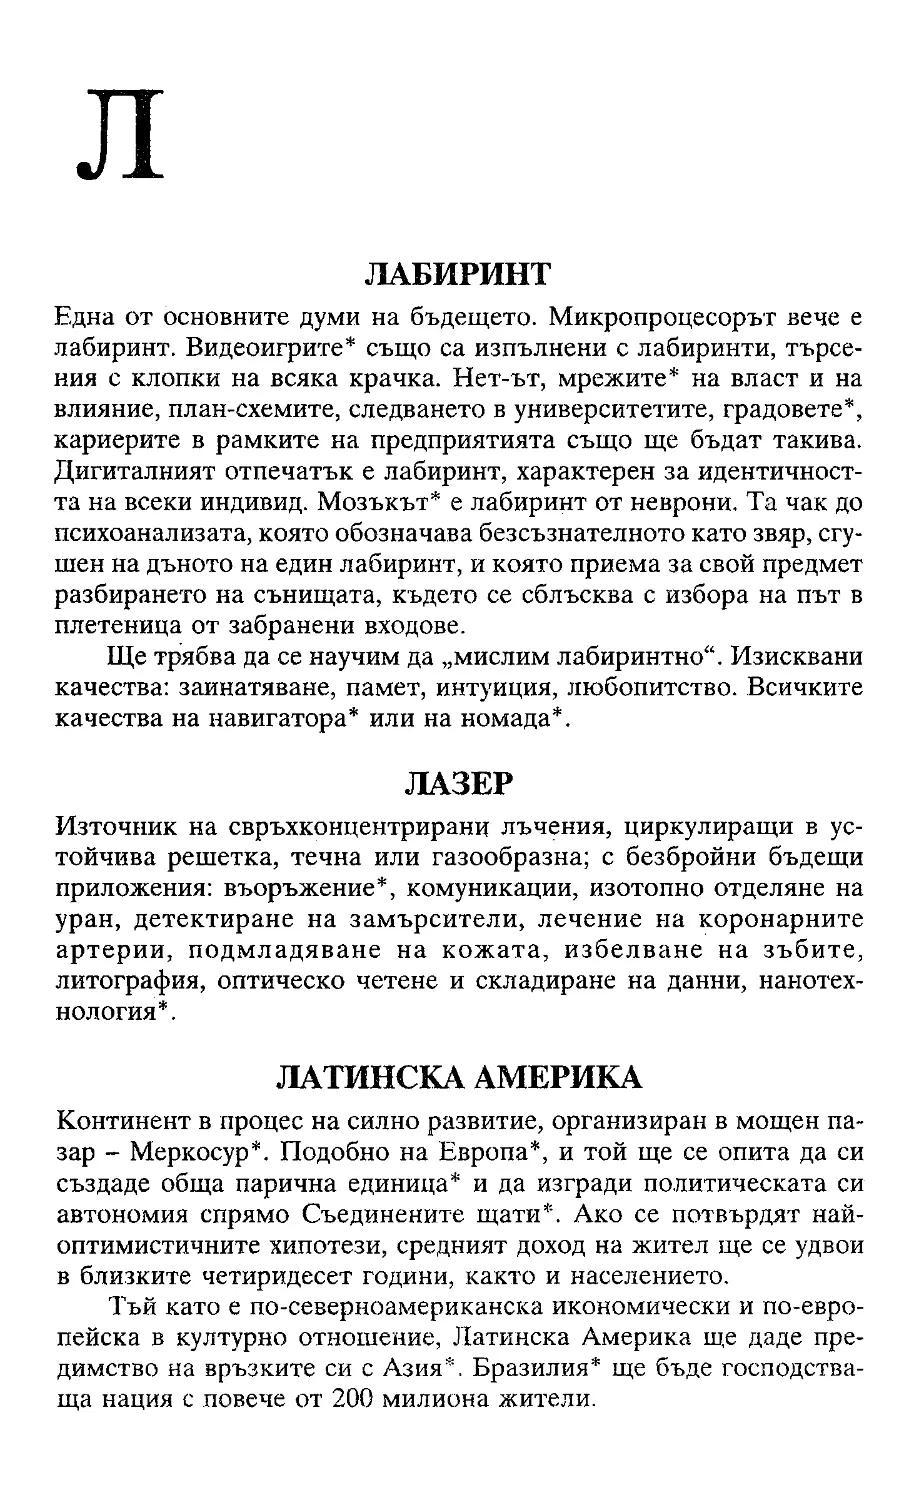 ﻿Жак Атали. Речник на 21 век_Page_064_Image_0001_1